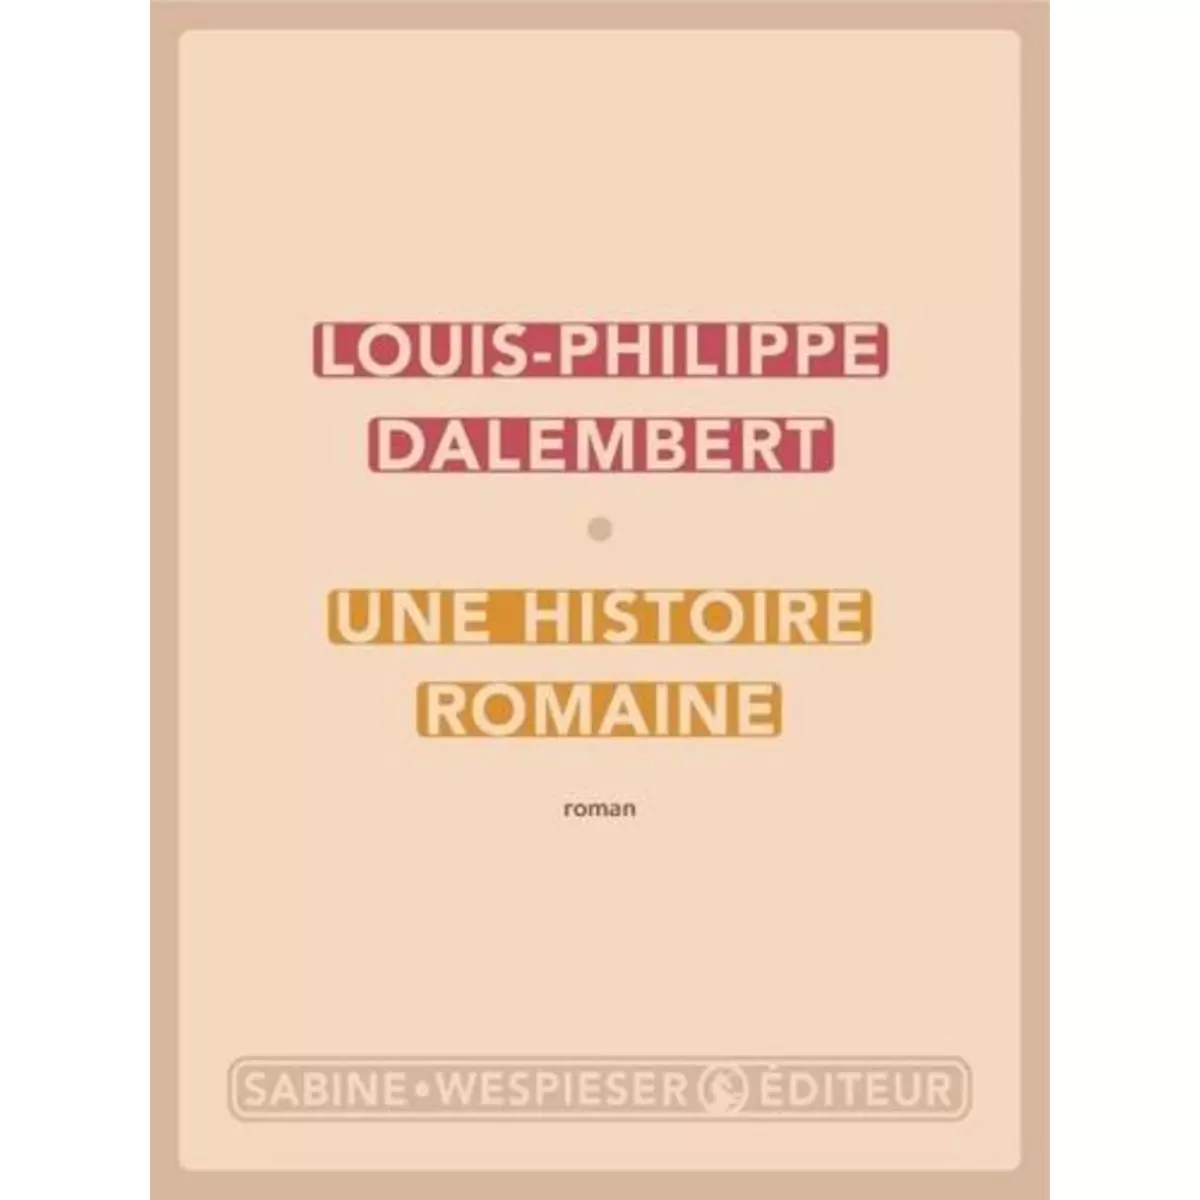  UNE HISTOIRE ROMAINE, Dalembert Louis-Philippe